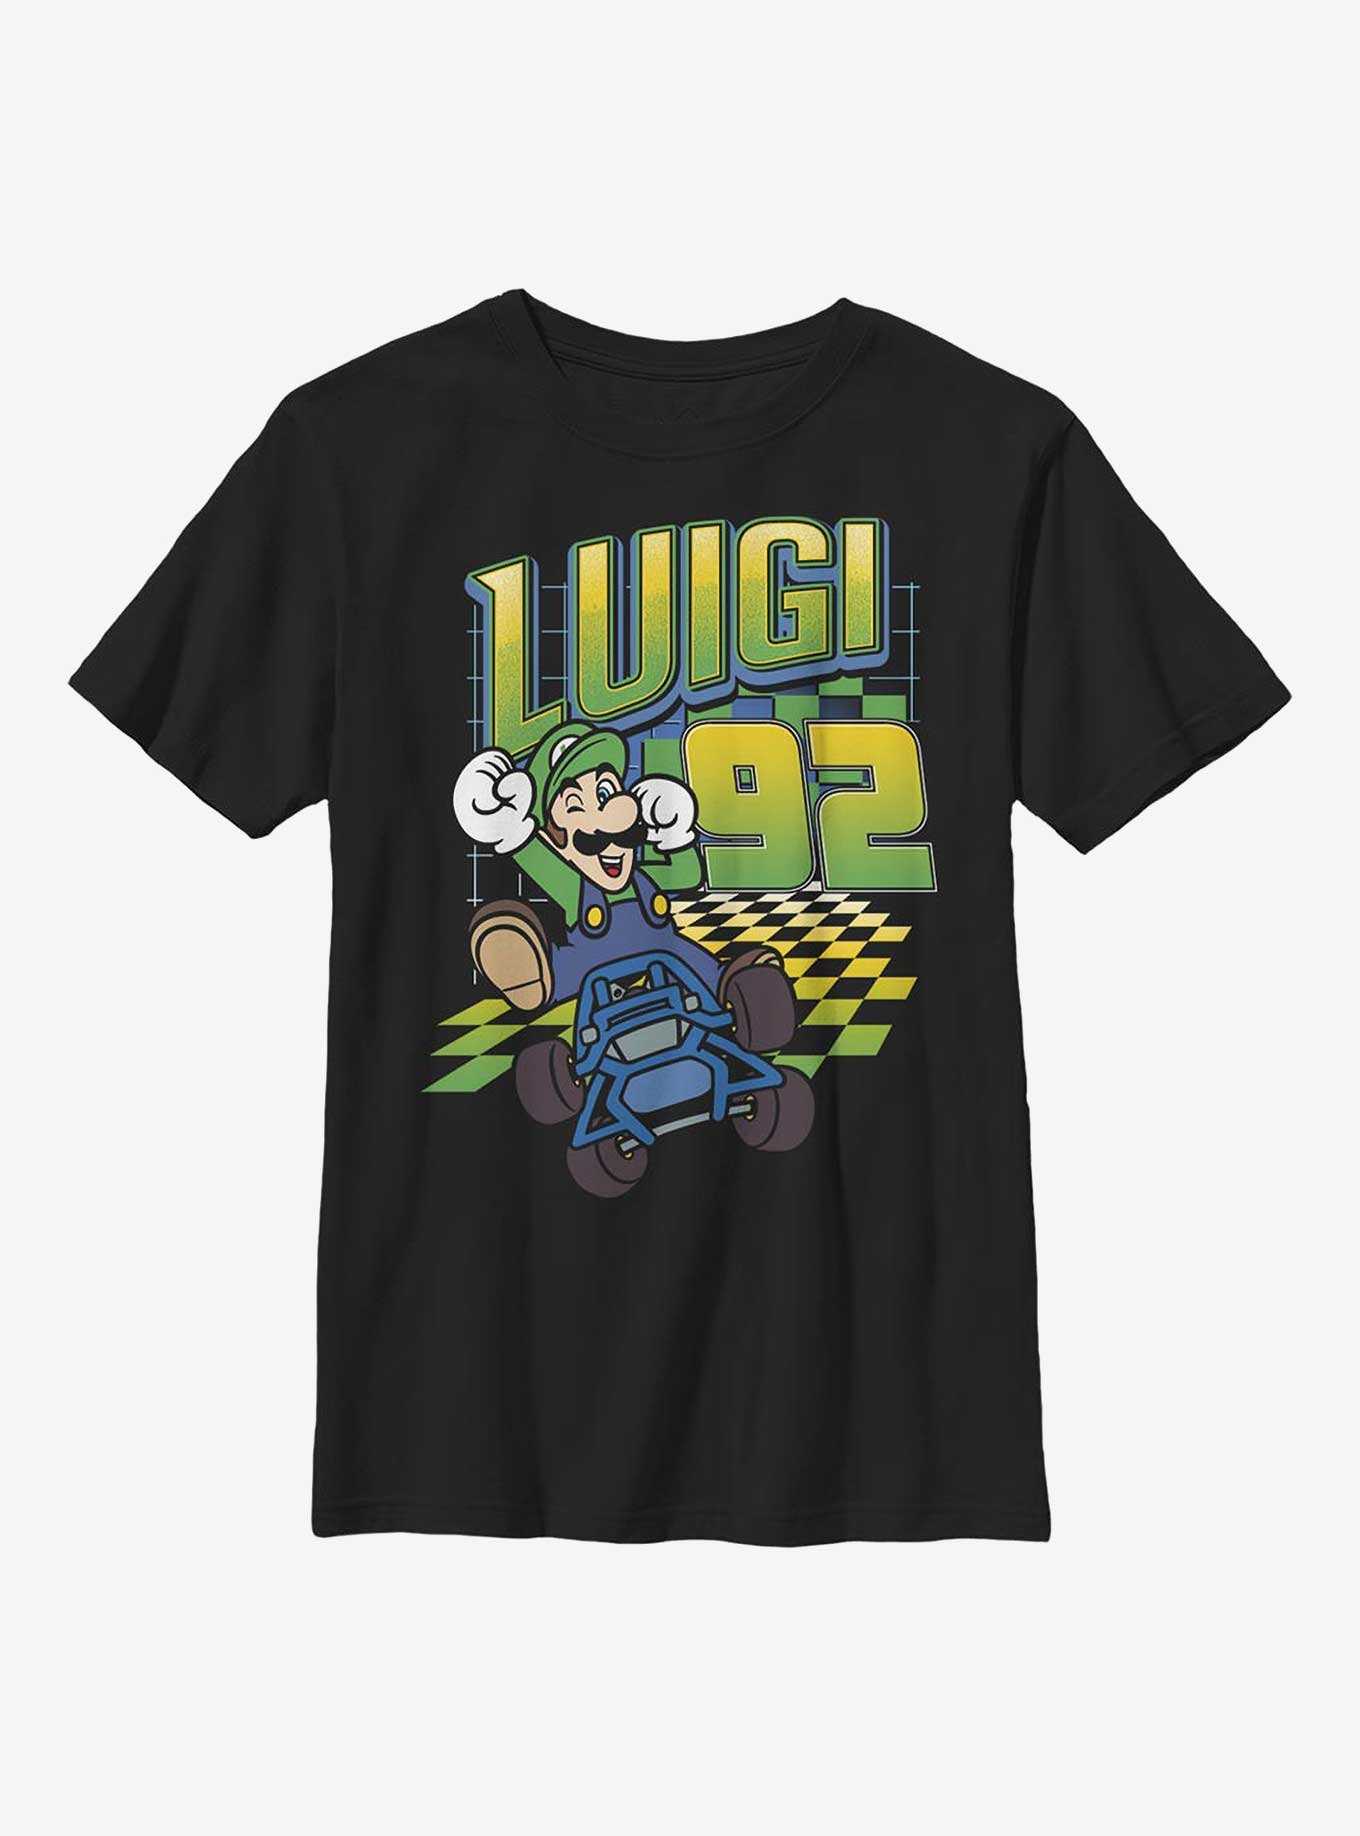 Nintendo Mario Kart Luigi '92 Youth T-Shirt, , hi-res